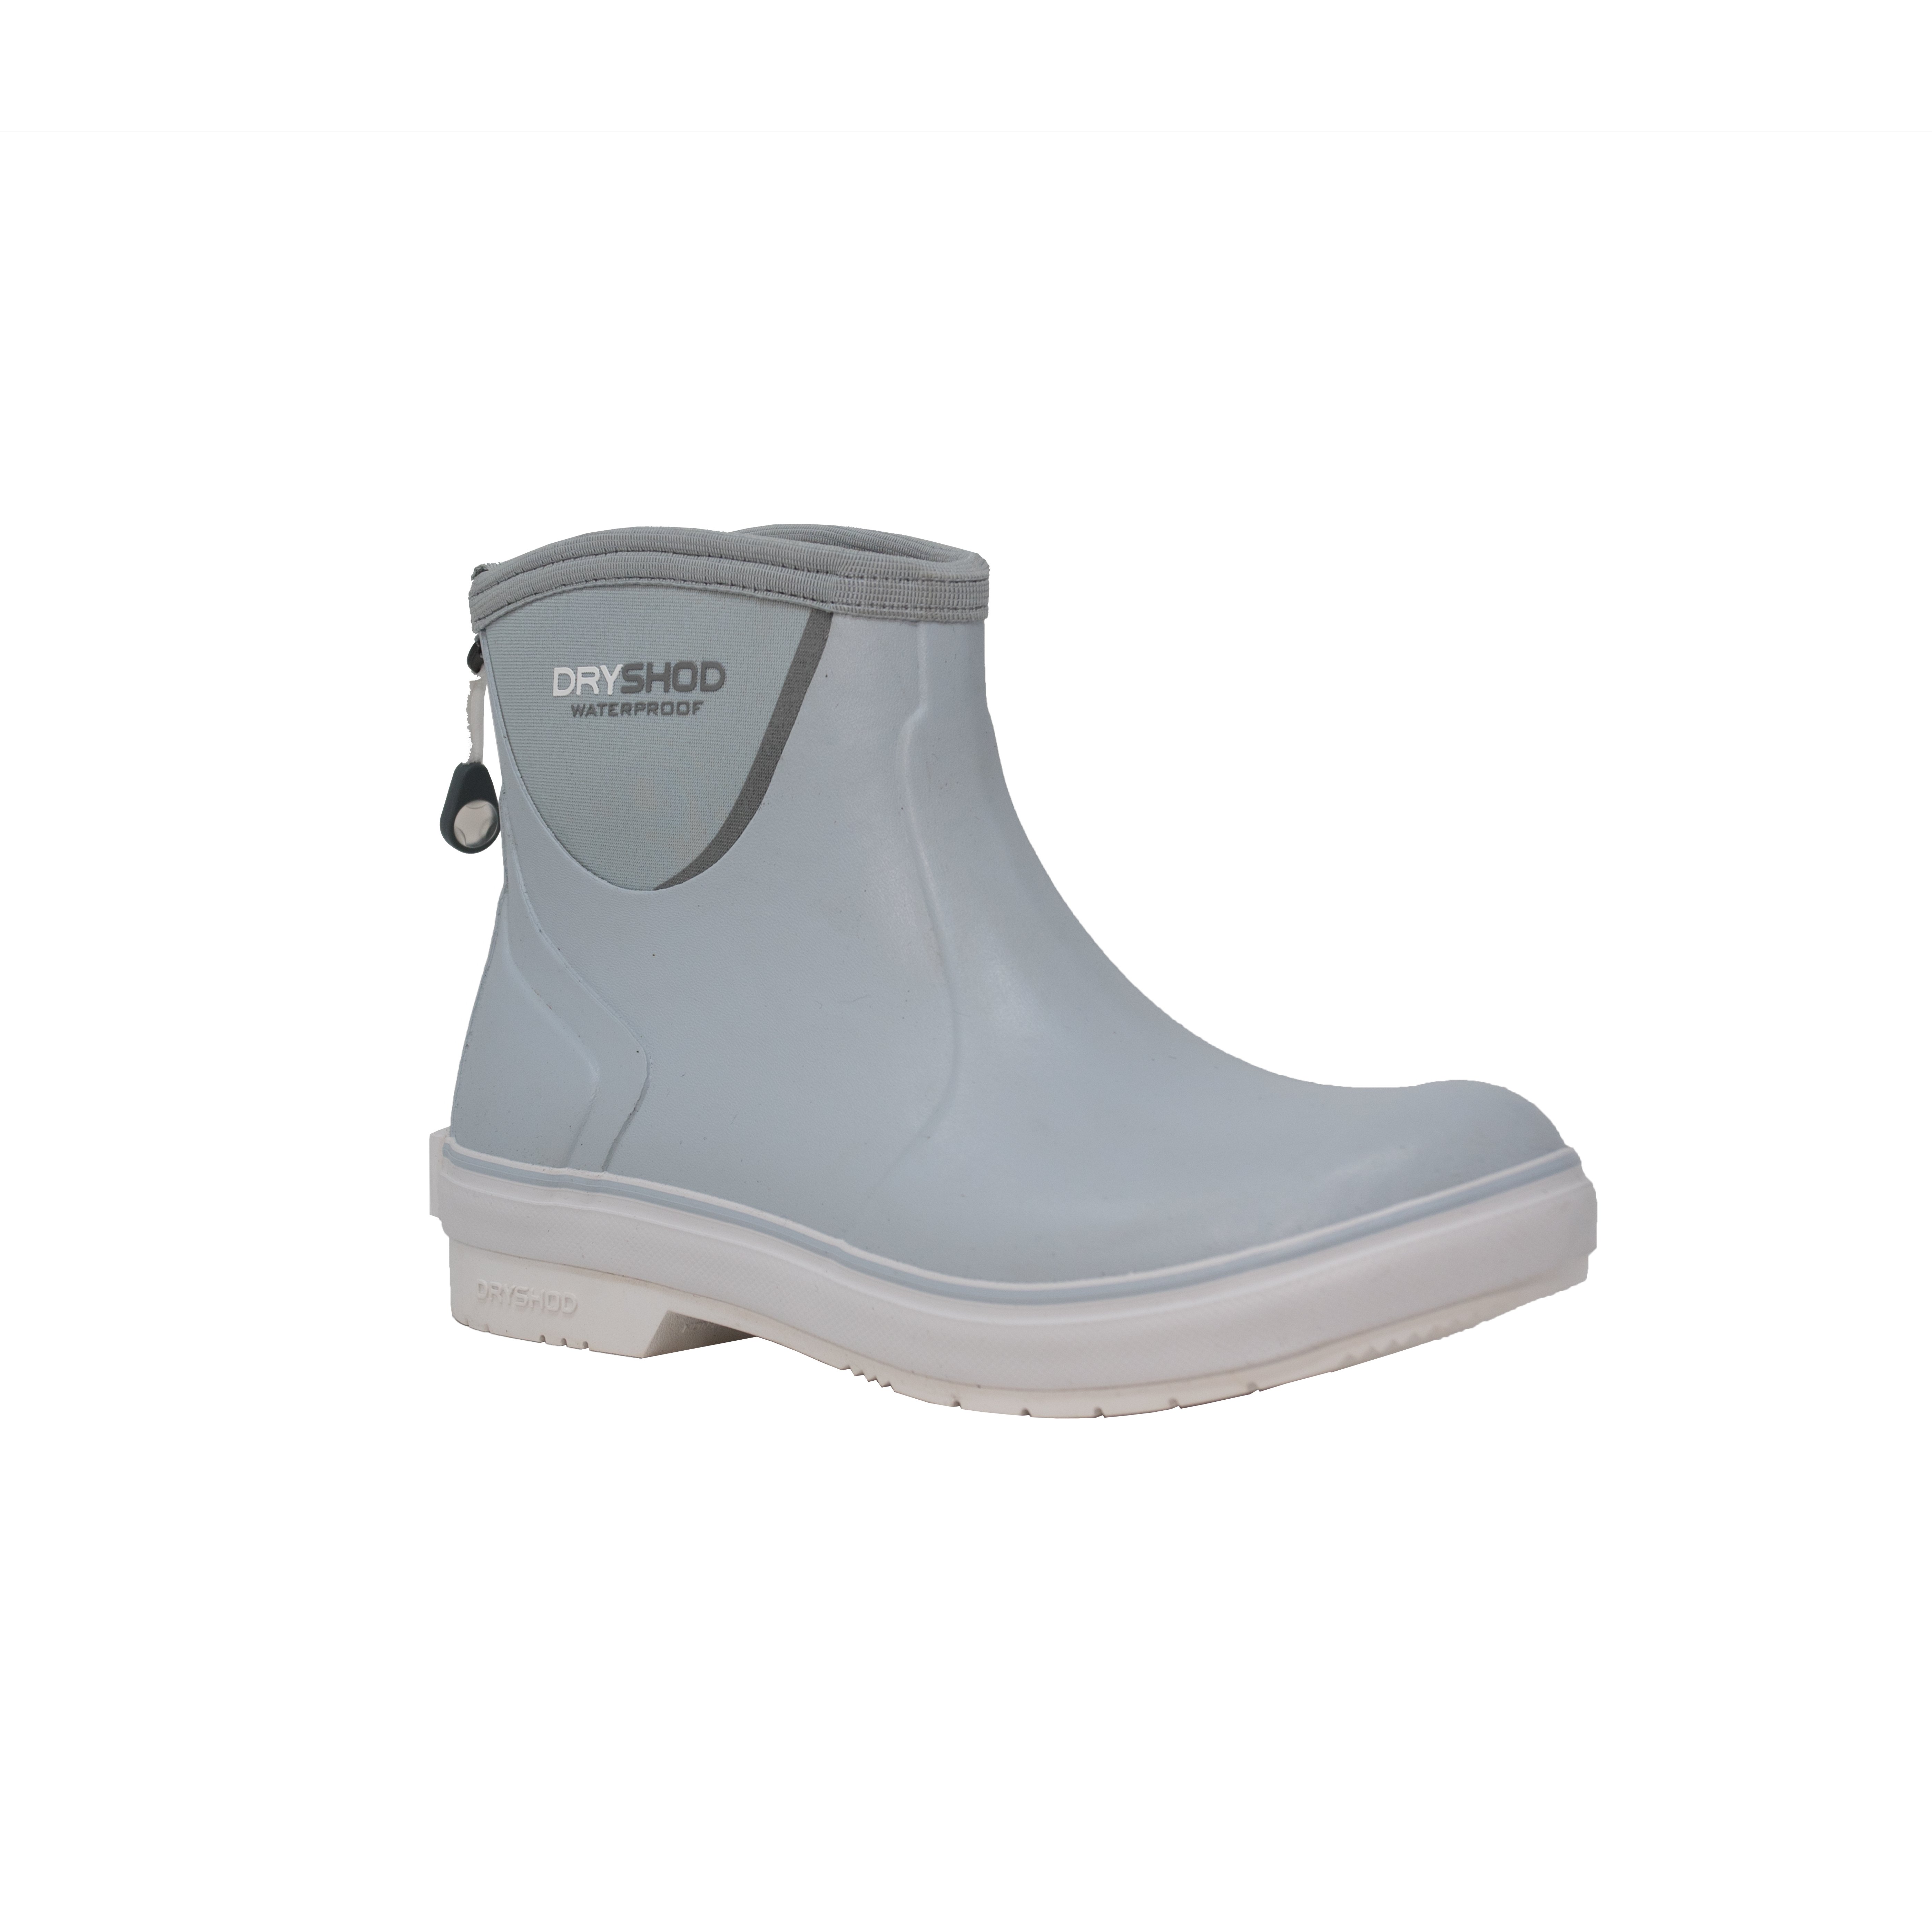 Slipnot Ankle Women’s Deck Boot Ghost Grey – Dryshod Waterproof Boots